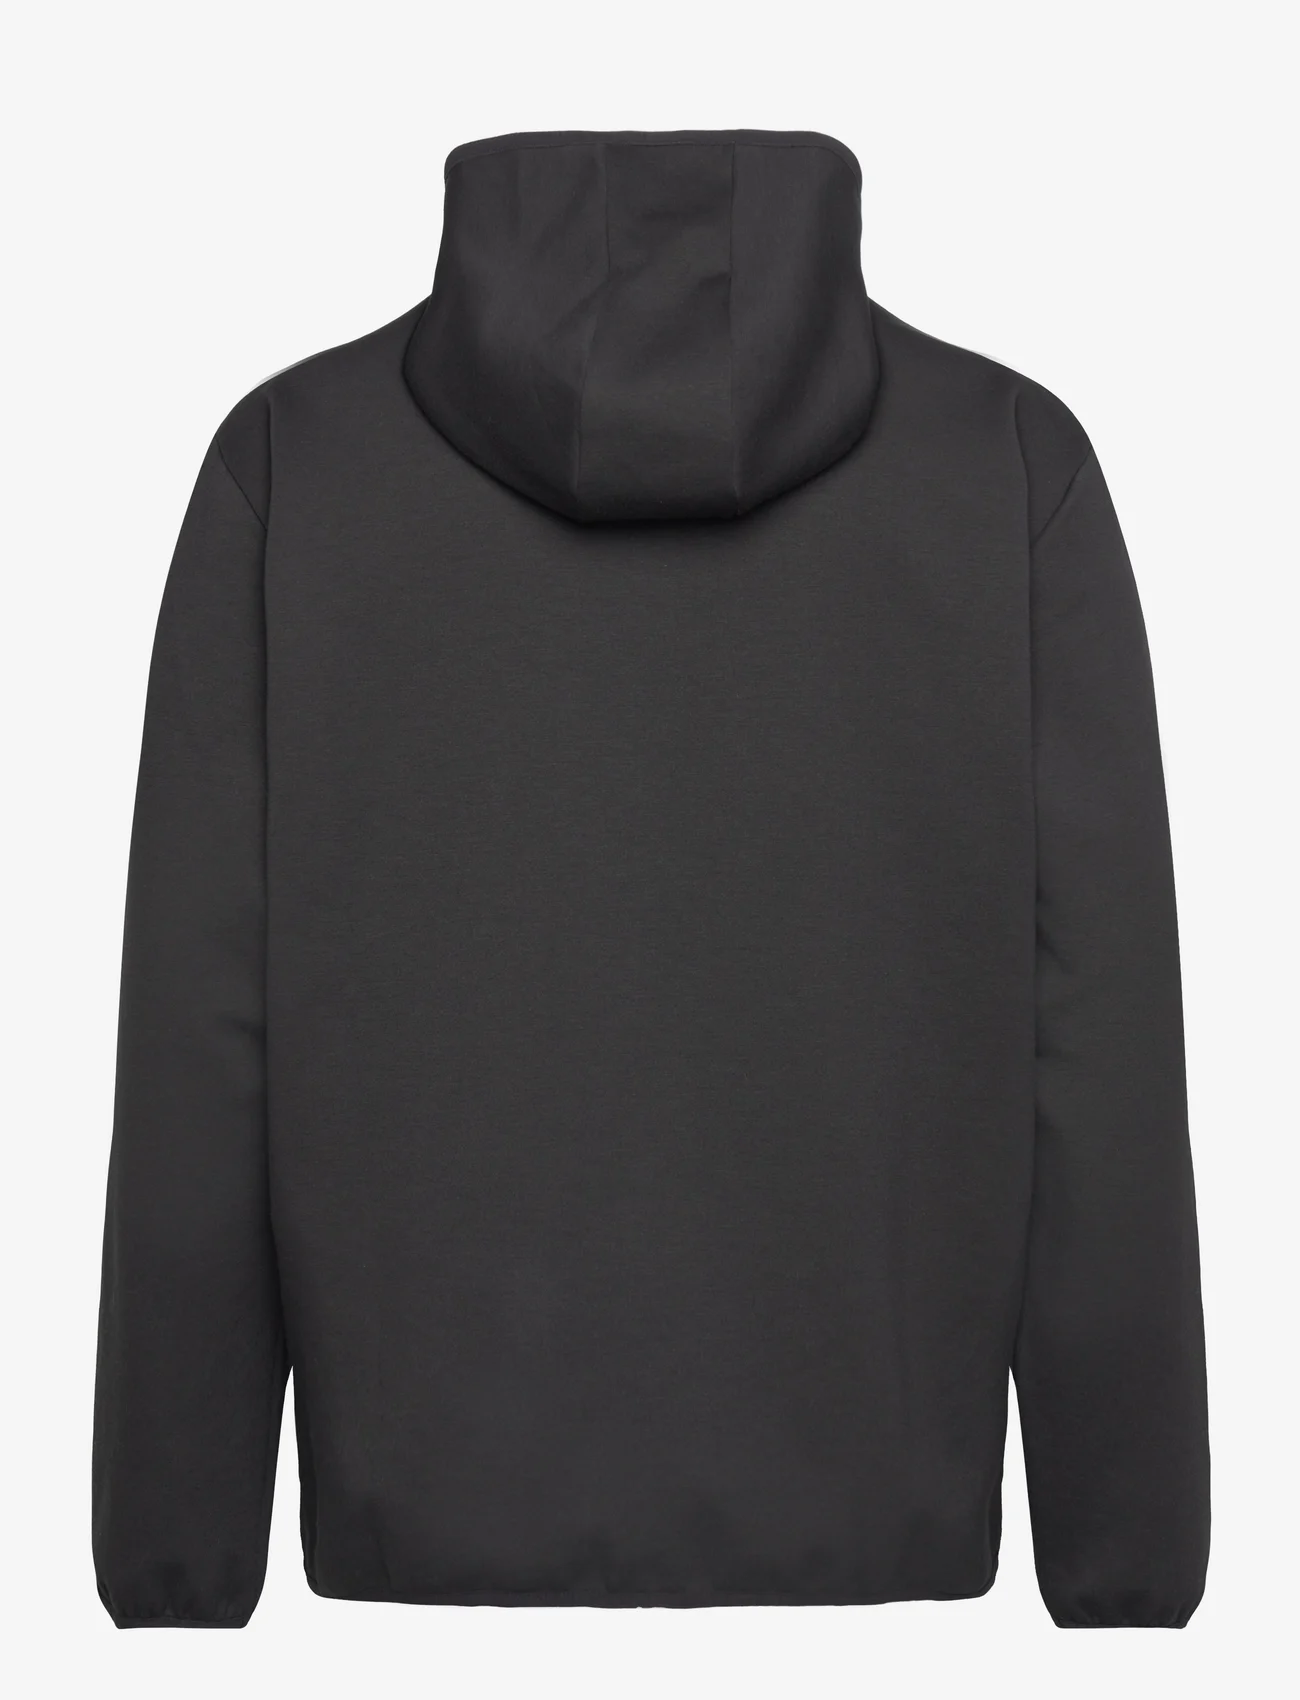 Champion - Hooded Full Zip Sweatshirt - hoodies - black beauty - 1